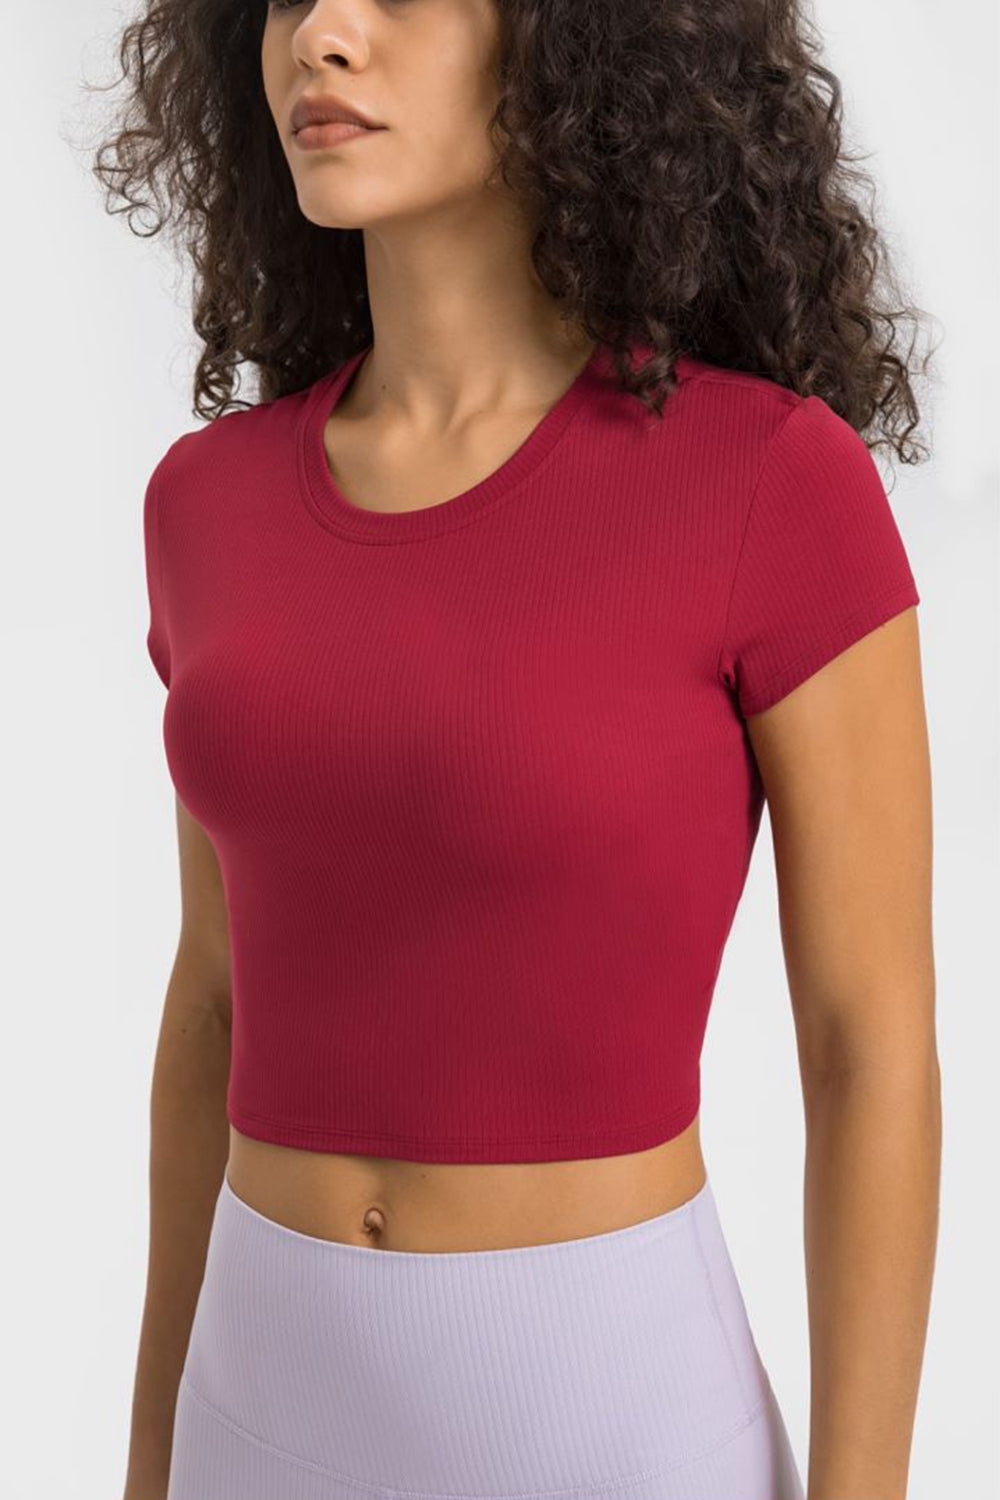 Round Neck Short Sleeve Cropped Sports T-Shirt  Trendsi   